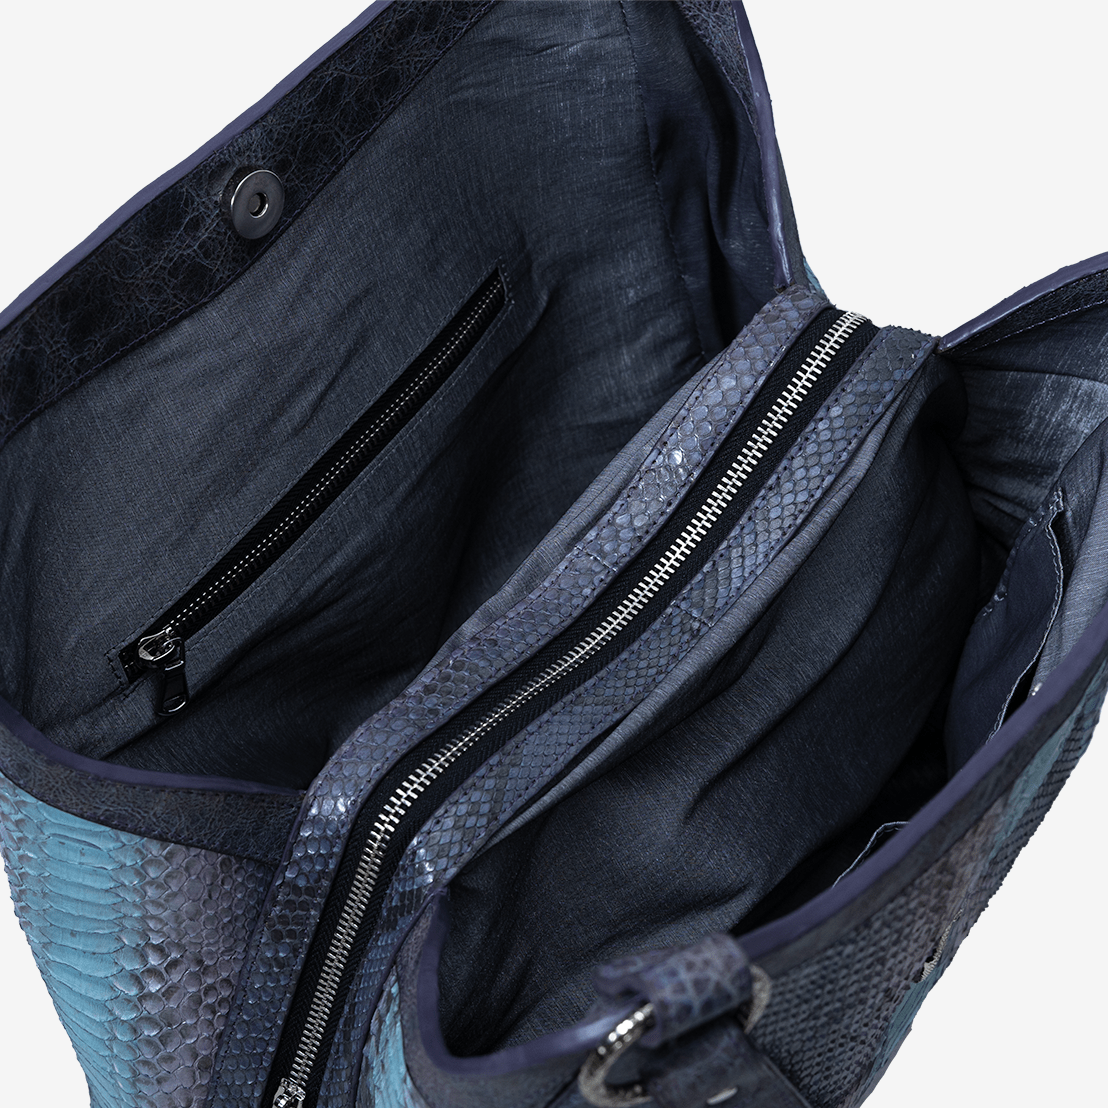 Veneno Leather Goods Bolsa Shoulder bag  - BARBARA Blue Mint